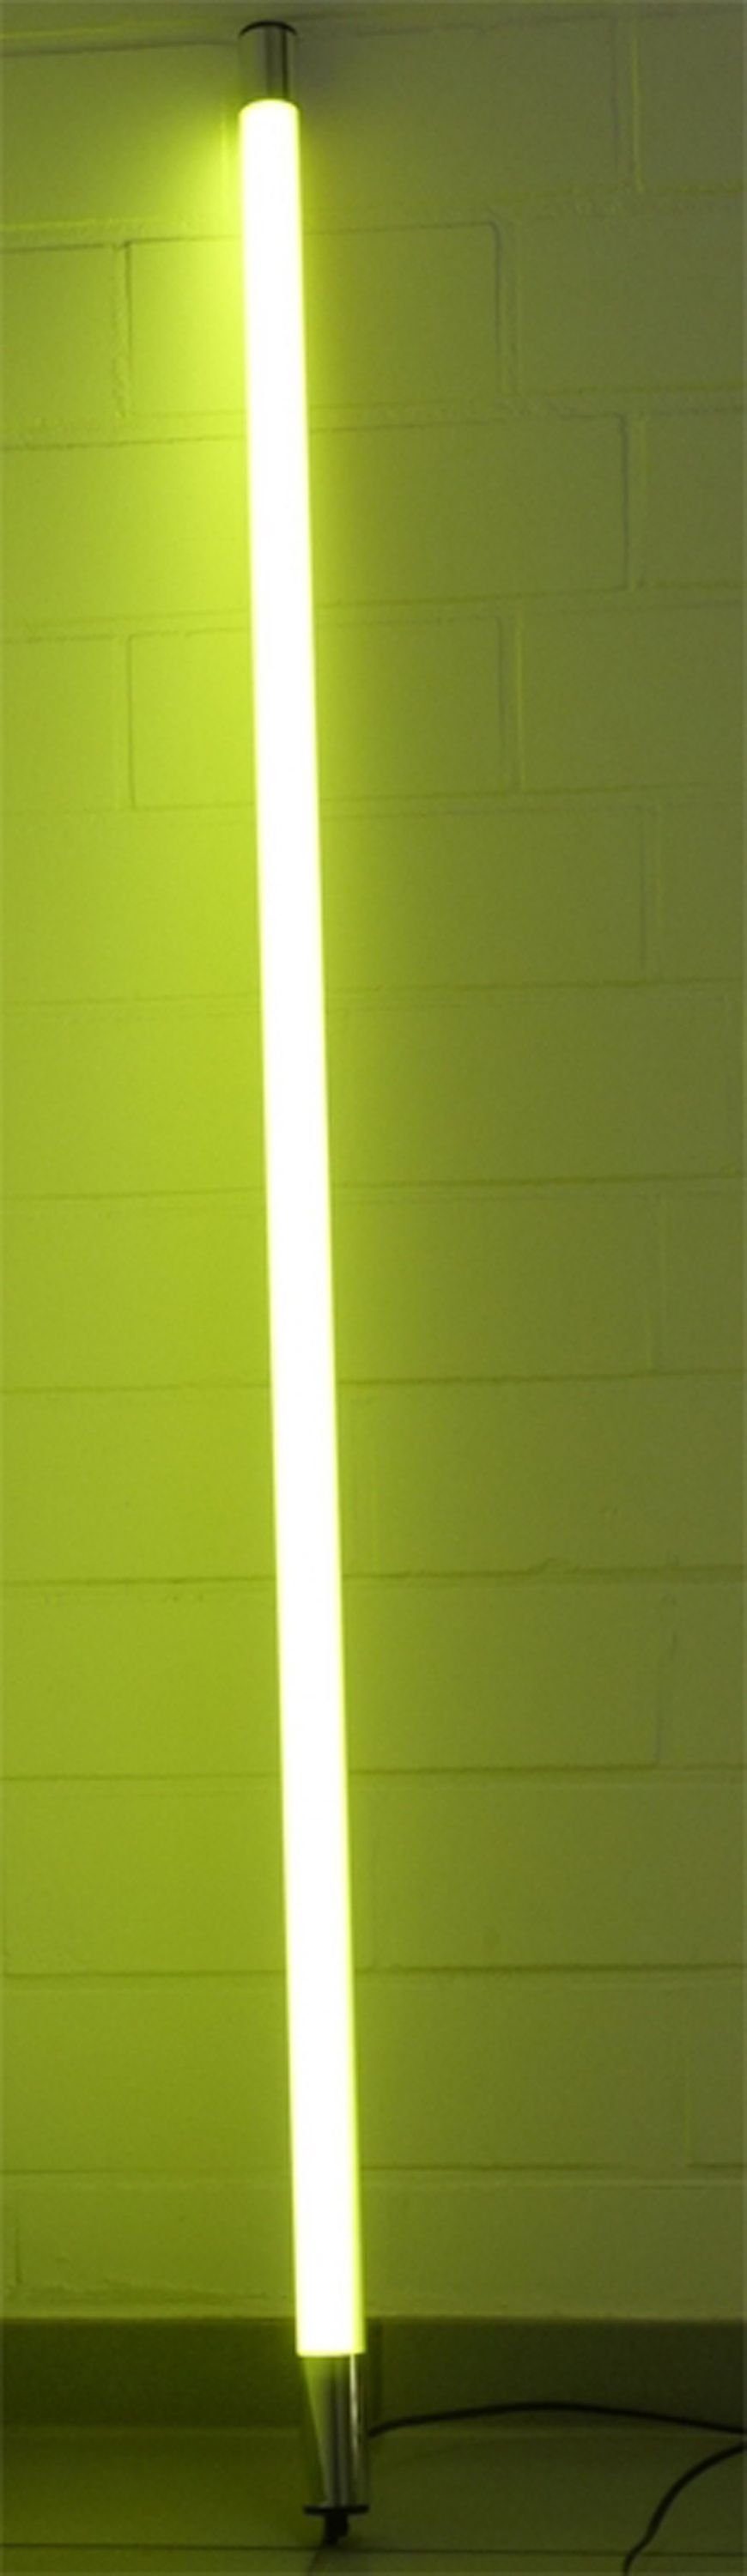 XENON LED Wandleuchte 6725 LED Leuchtstab Satiniert 0,63m Lang 1000Lumen IP20 Innen KaltWeiß, LED Röhre T8, Xenon, Wand / Decken /Zaun Leuchte